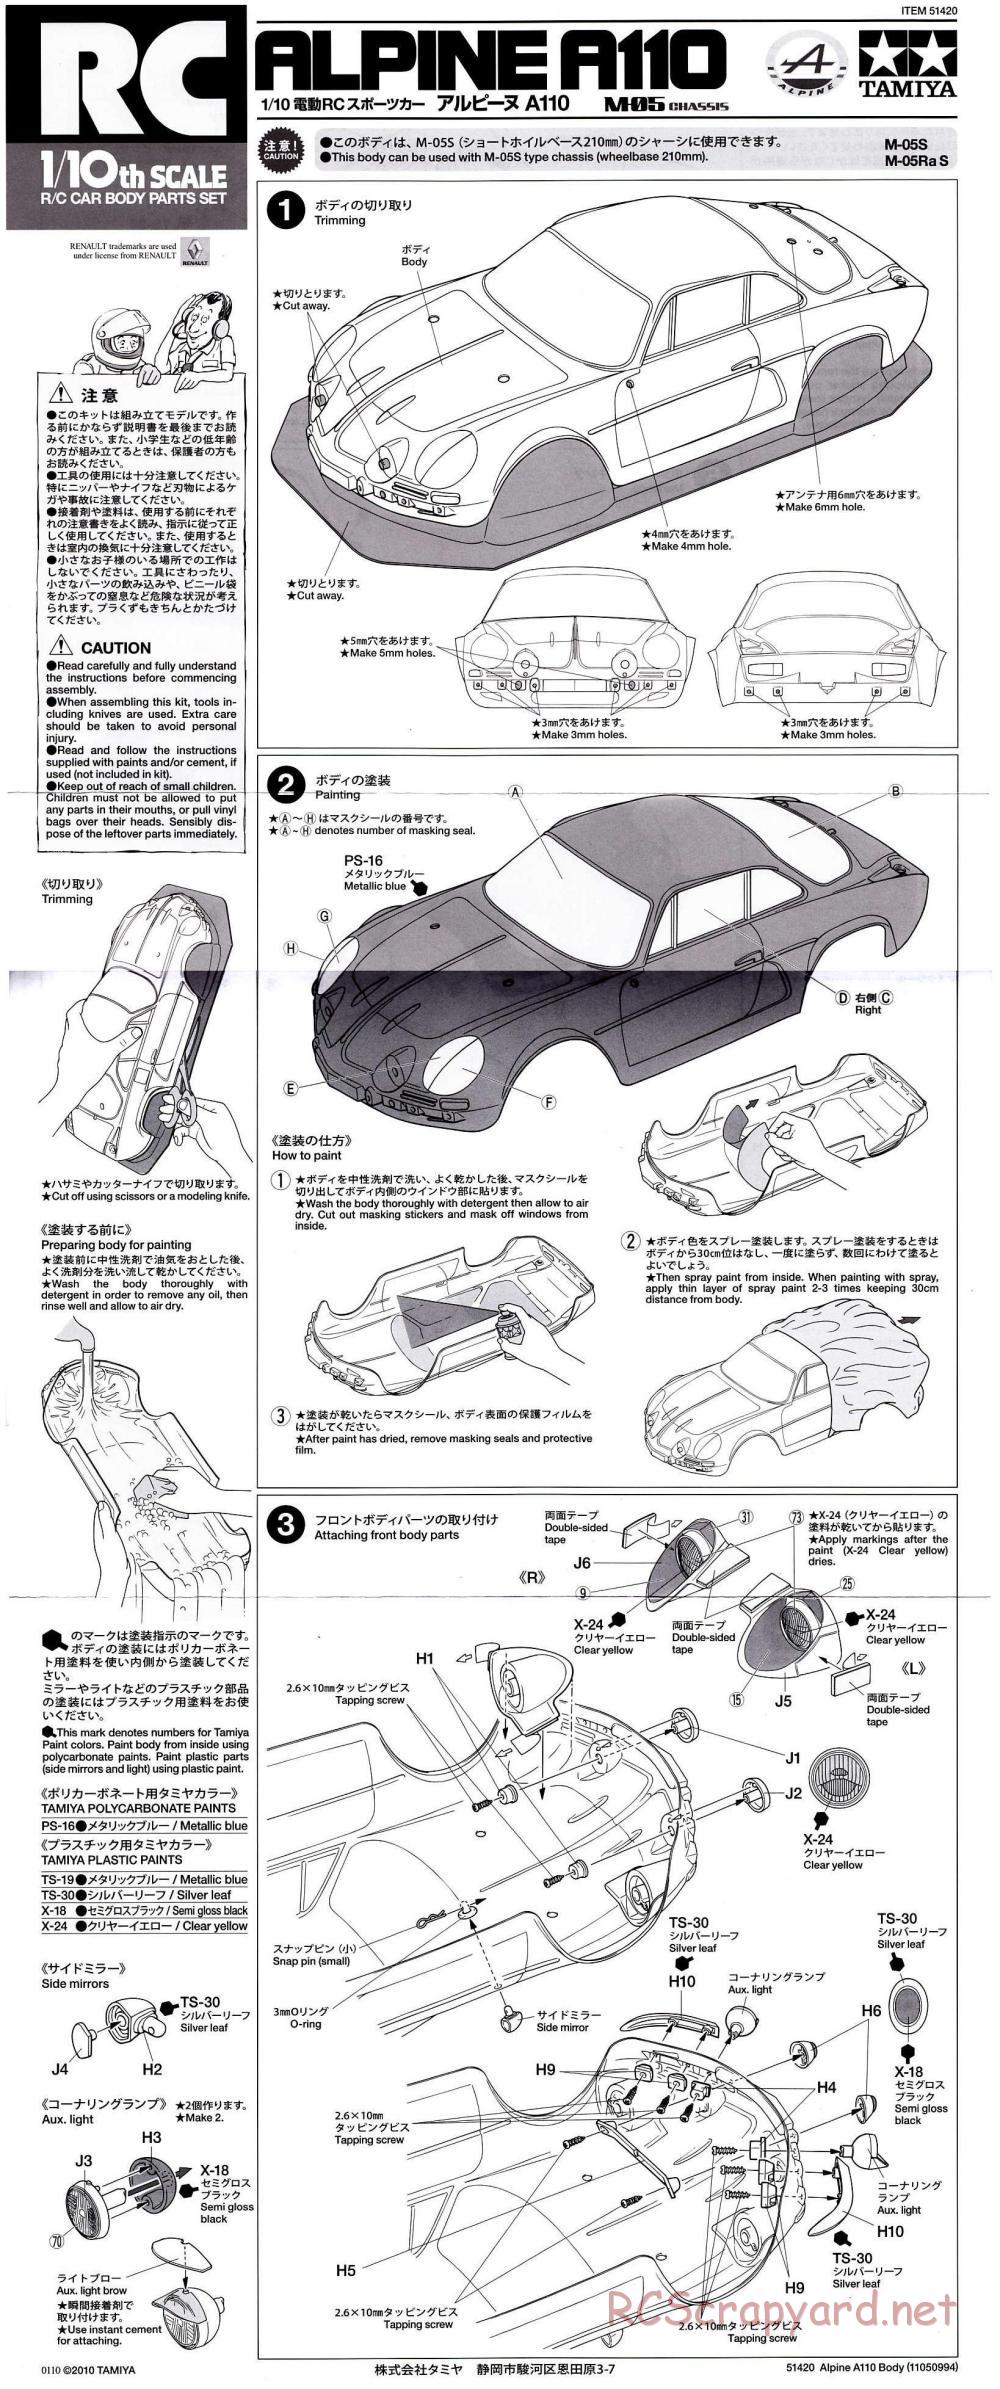 Tamiya - Alpine A110 - M-05Ra Chassis - Body Manual - Page 1